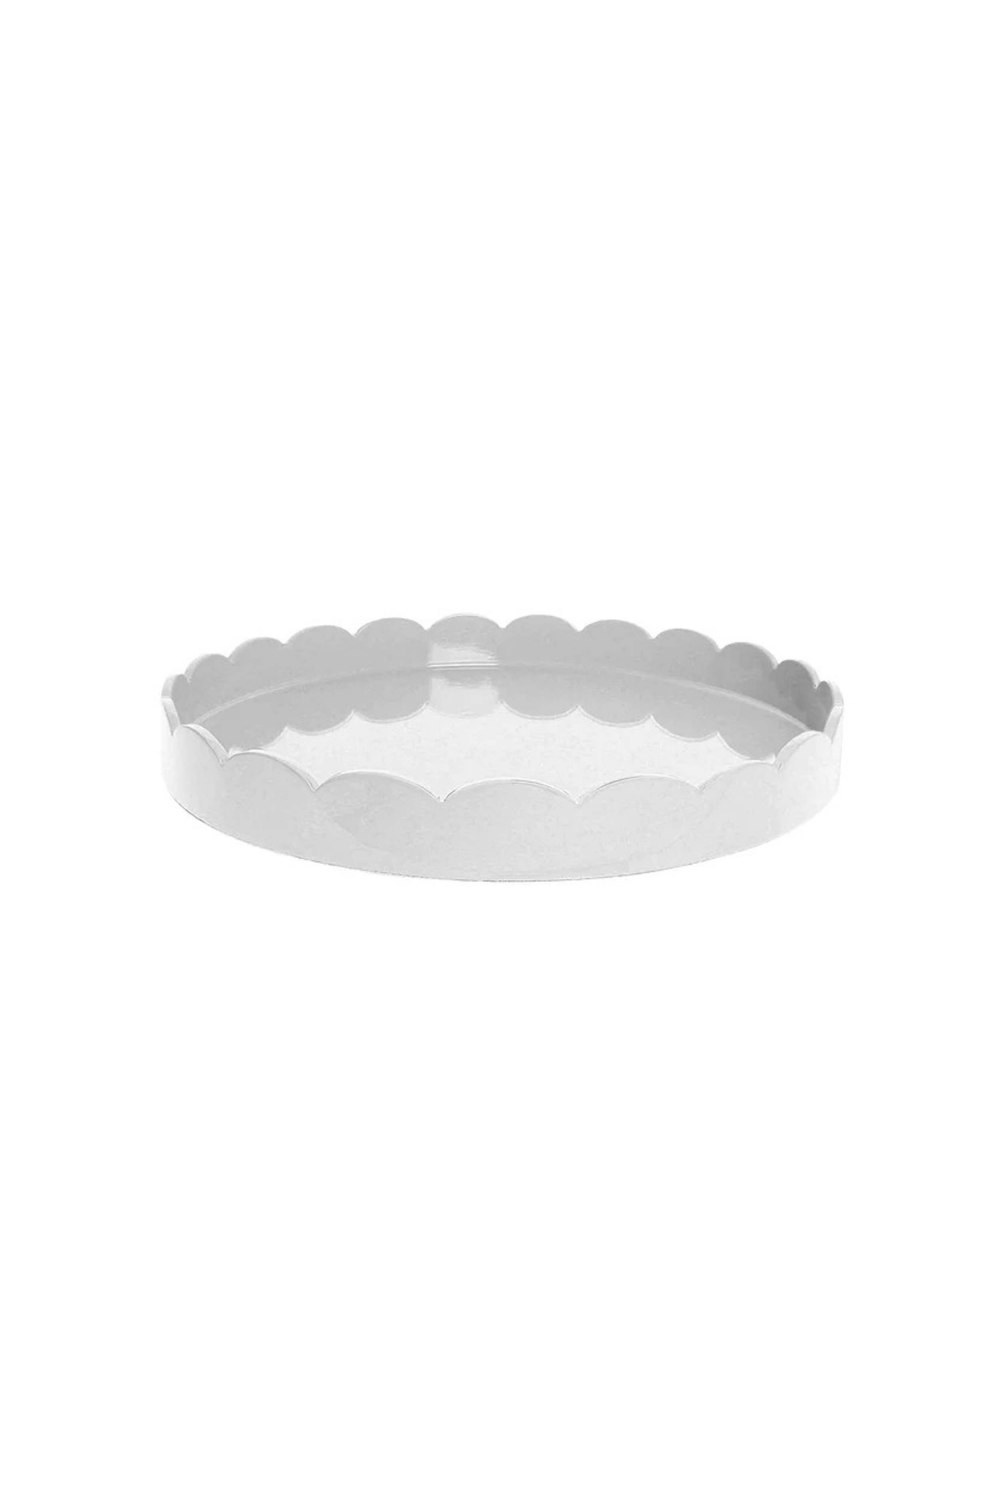 ADDISON ROSS - White Round Medium Lacquered Scallop Tray